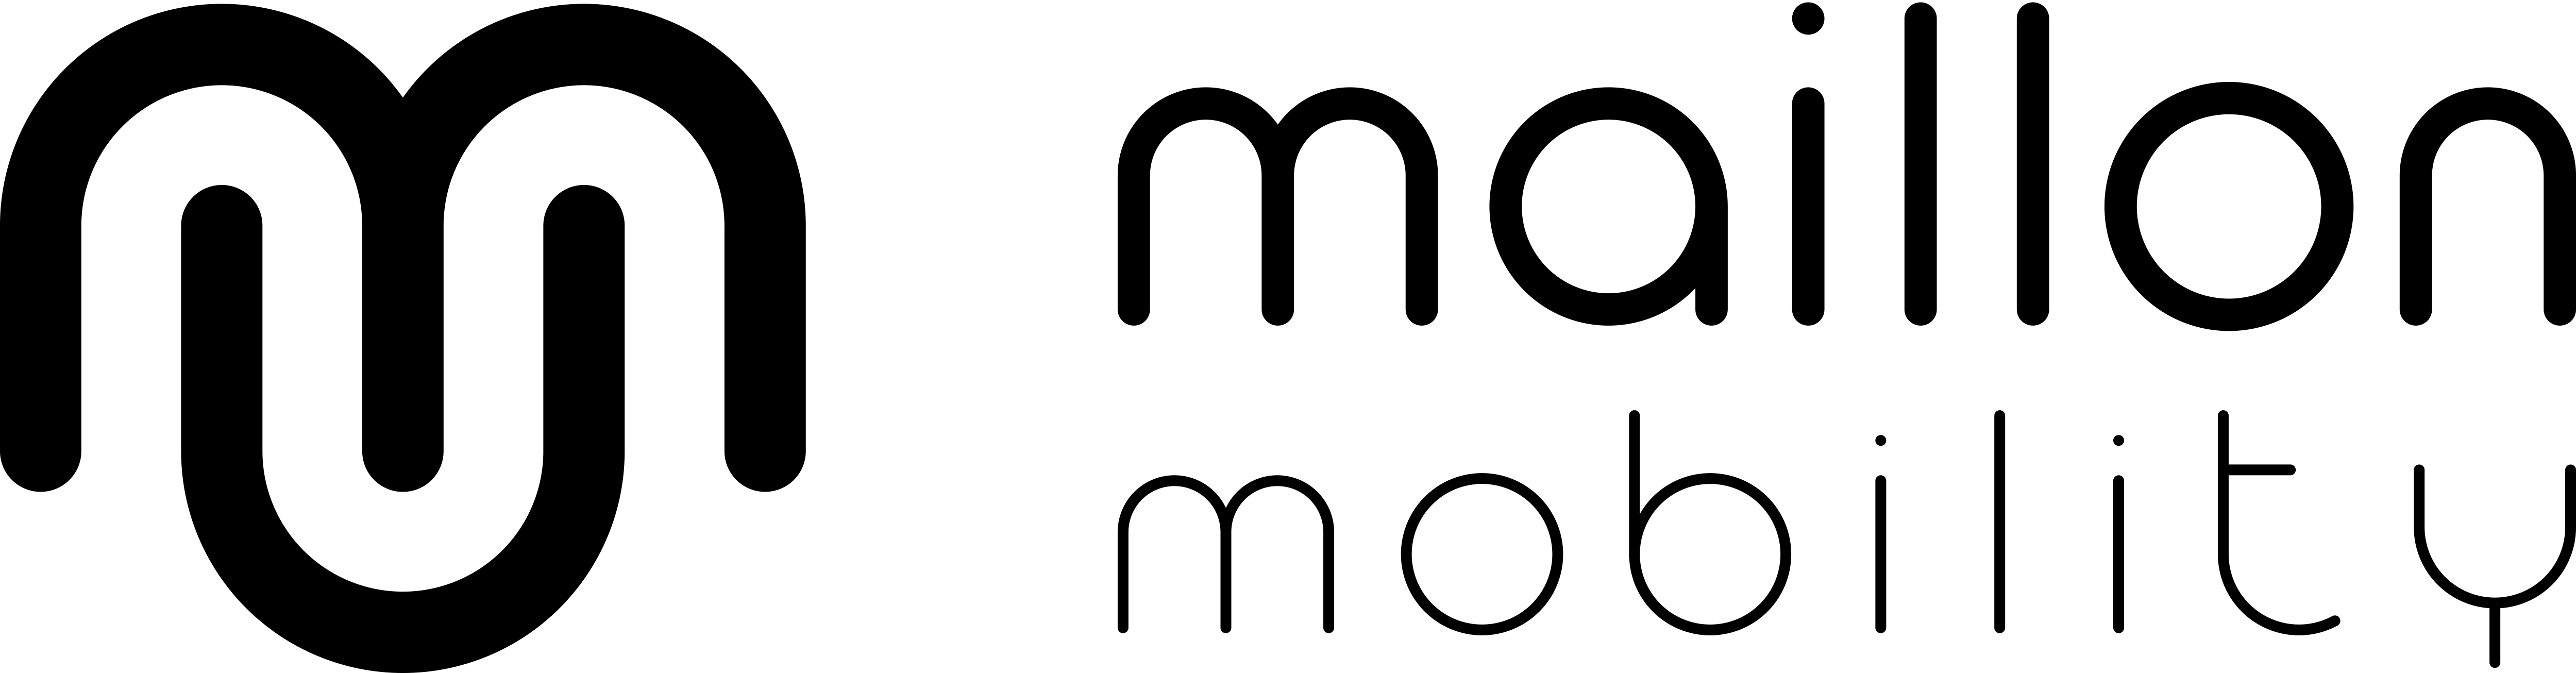 Maillon Mobility logo horizontale noir.png